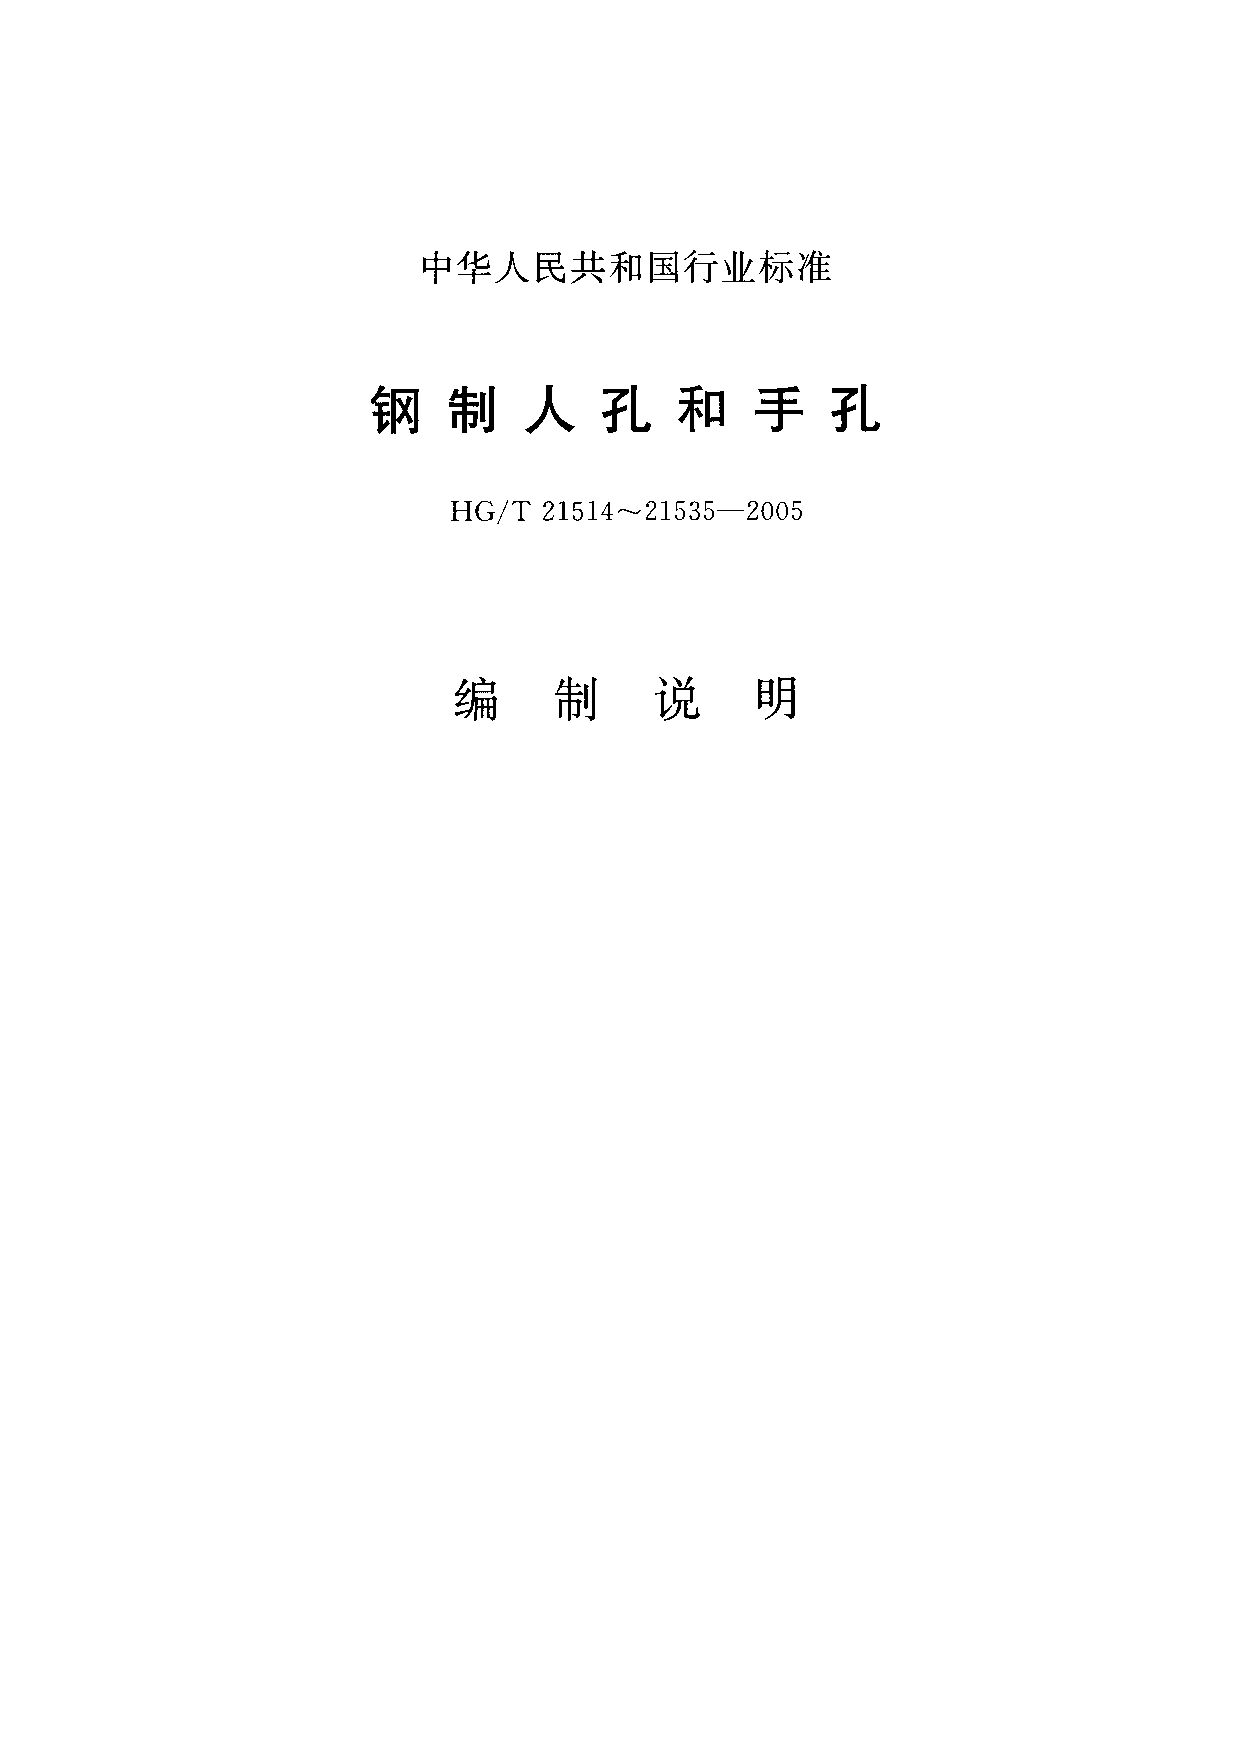 HG/T 21521-2005（编制说明）